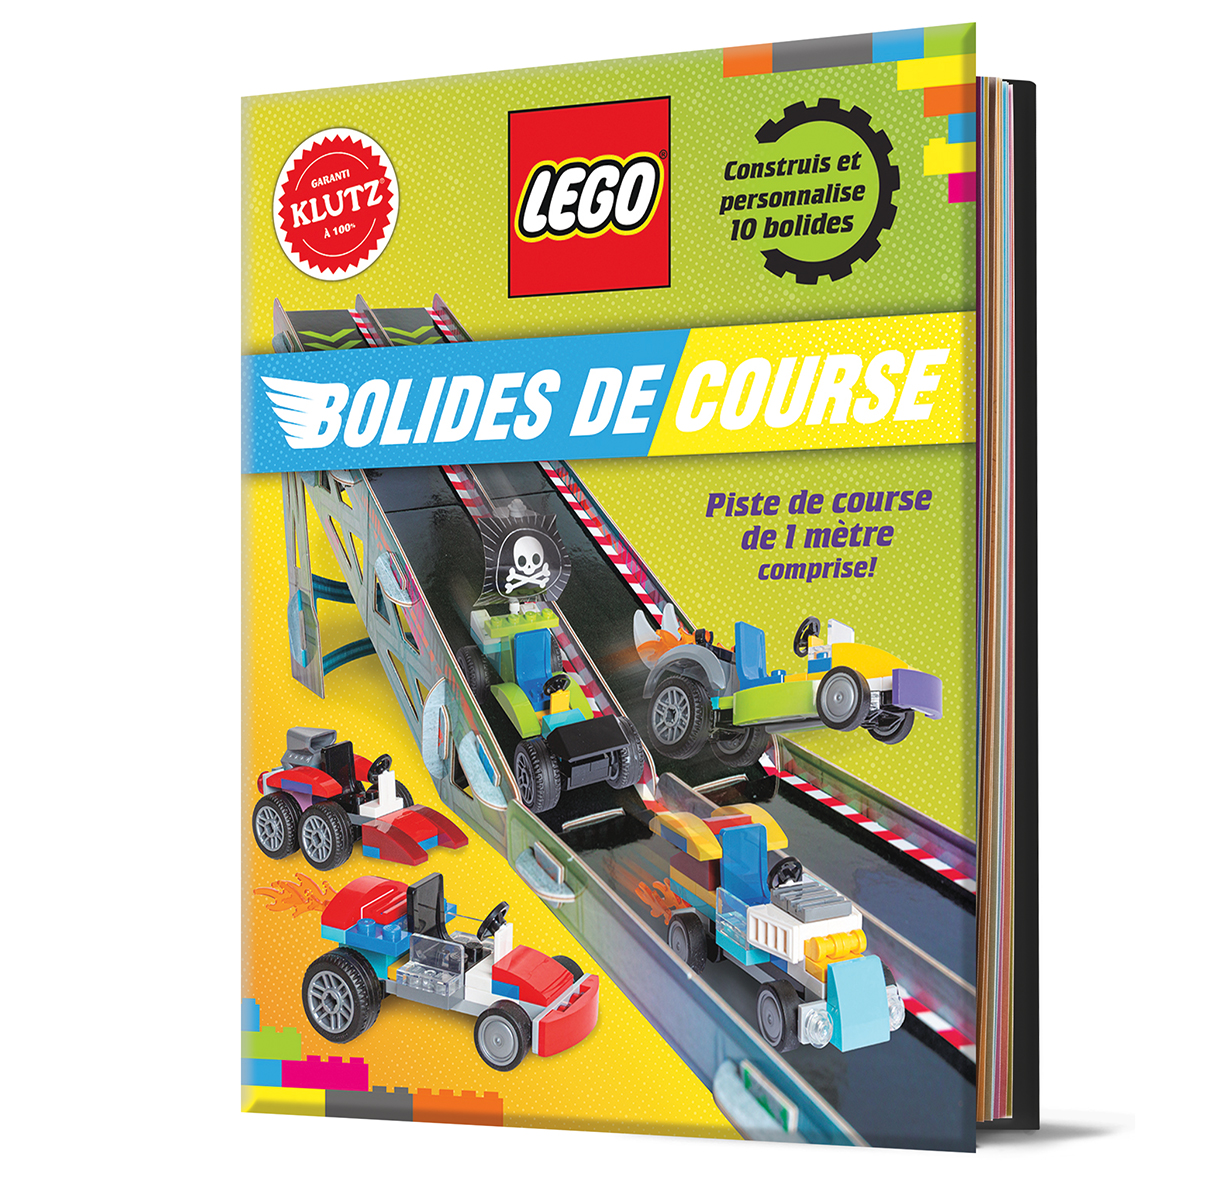  Klutz : LEGO : Bolides de course 